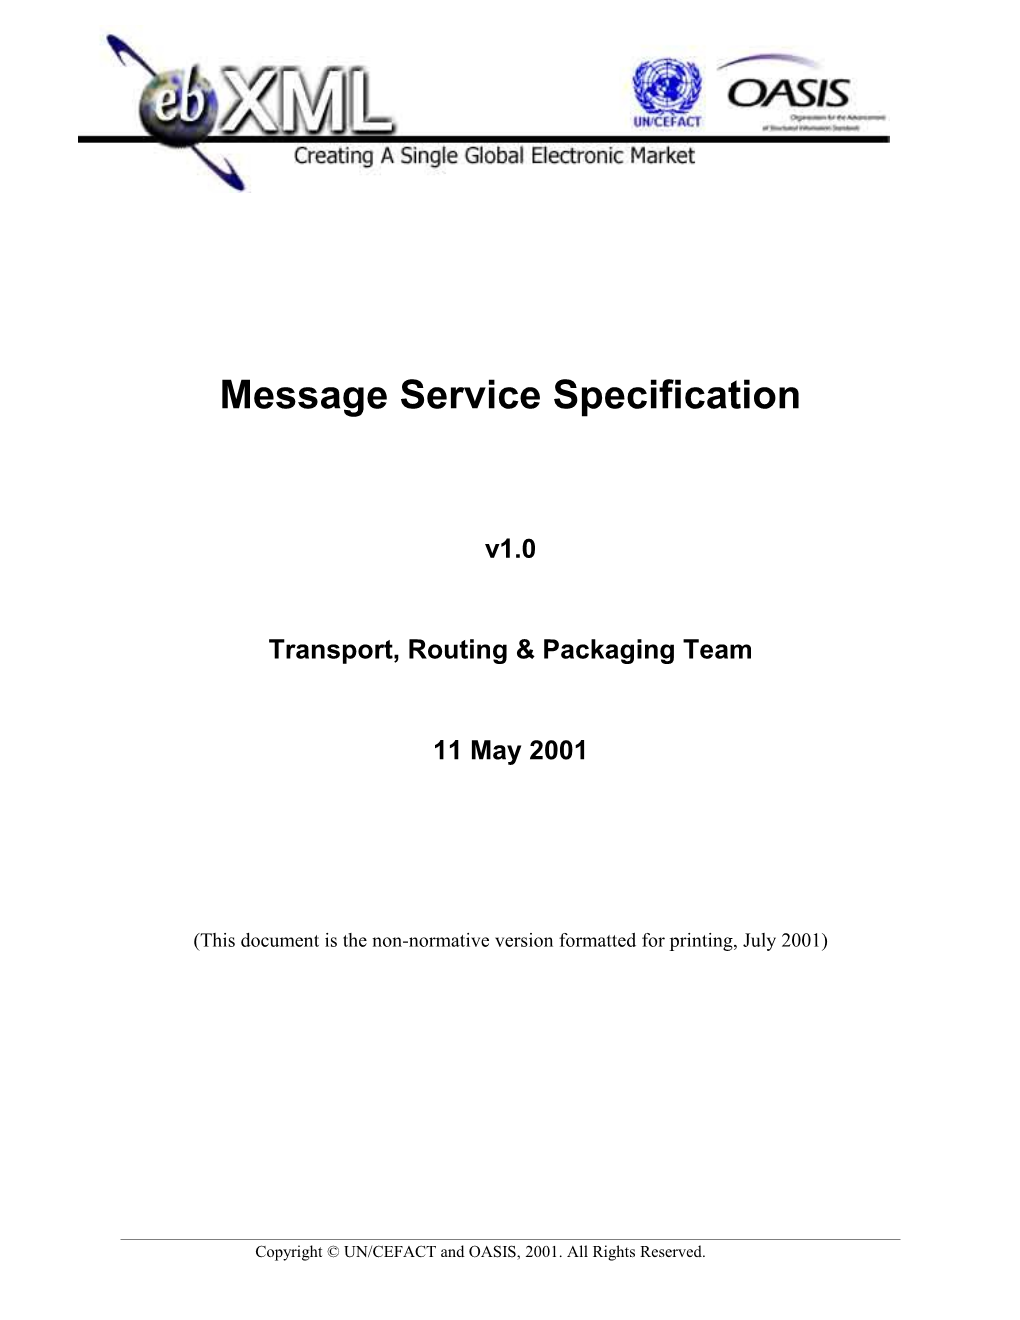 Ebxml Message Service Specification